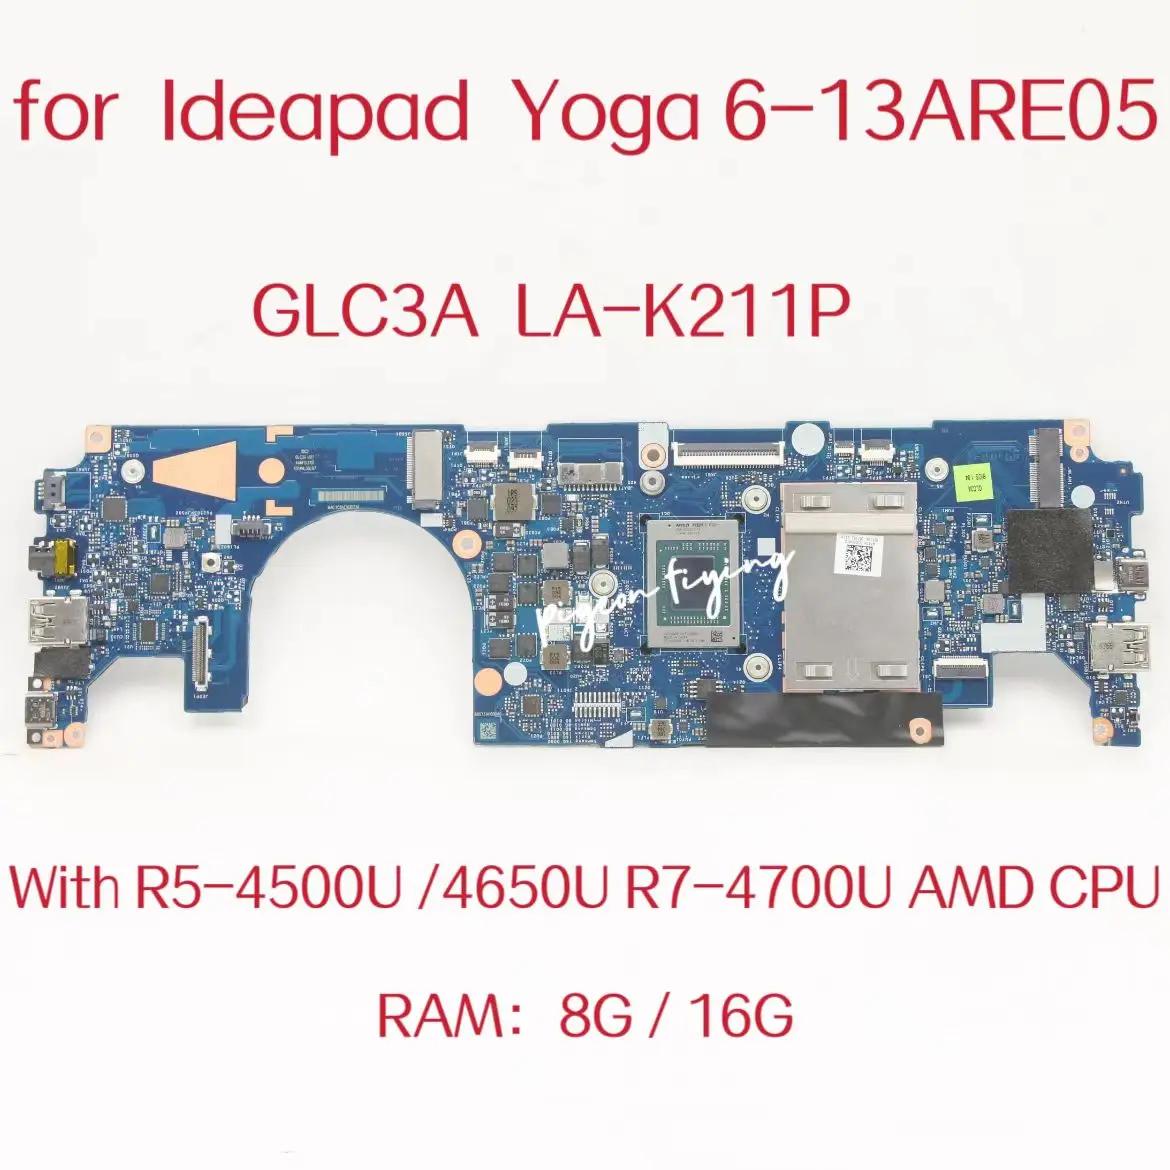 Ideapad 䰡 6-13ARE05 Ʈ  GLC3A LA-K211P, R5-4500U 4650U R7-4700U AMD CPU RAM:8G/16G FRU:5B21B79345